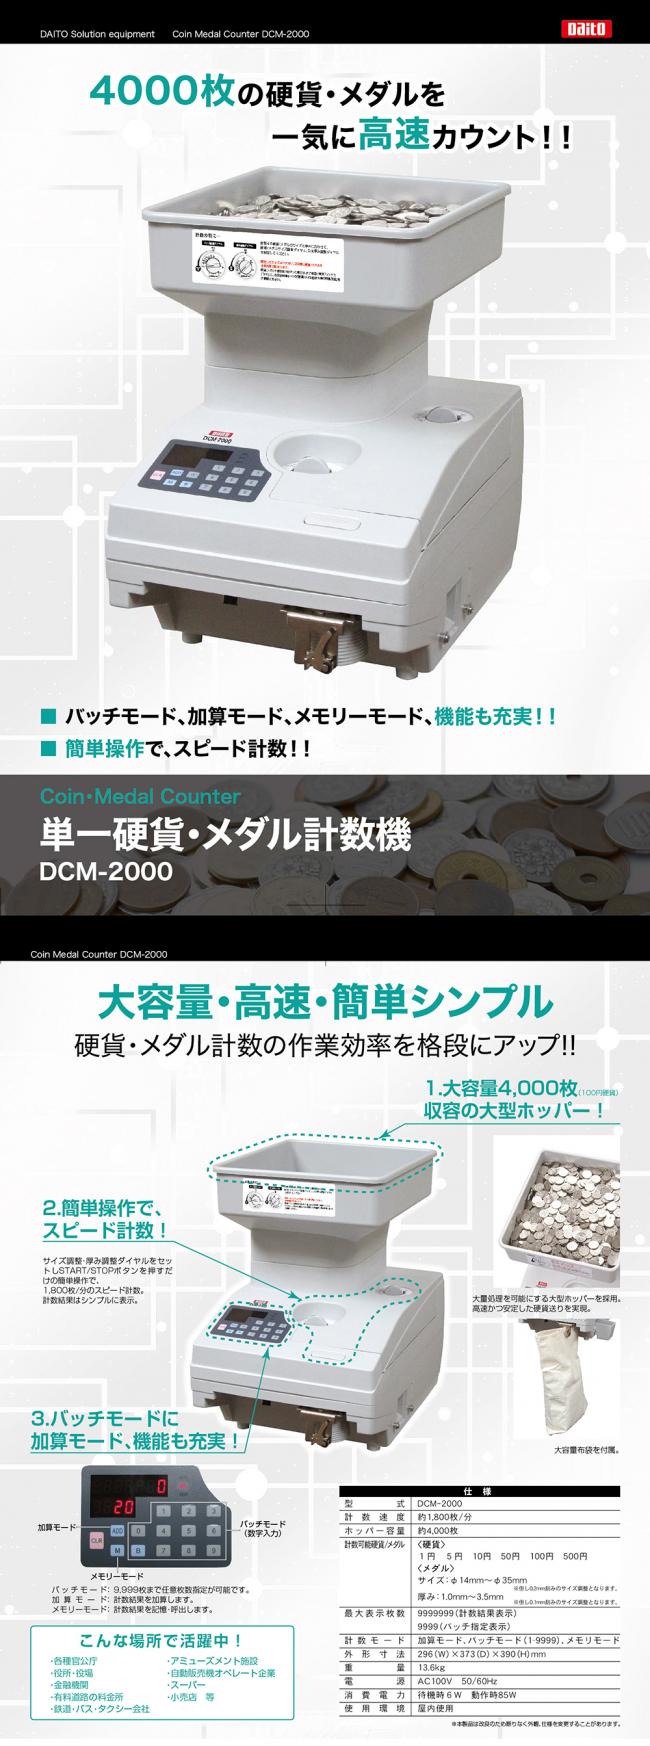 dcm-2000_catalog_2-01.jpg